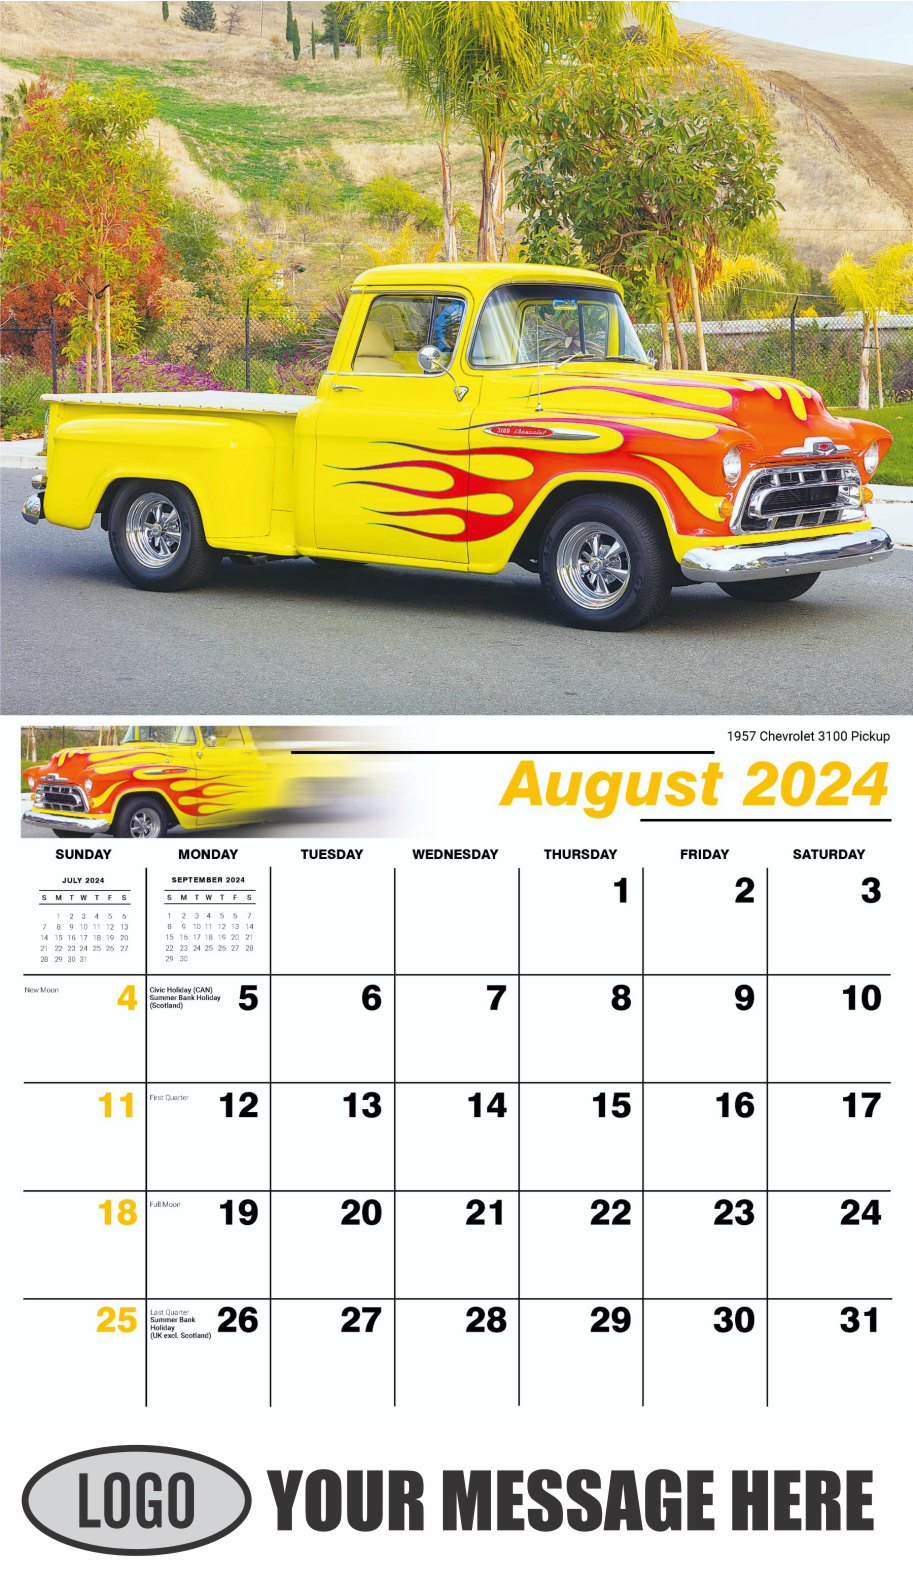 Pumped-Up Pickups 2024 Automotive Business Promo Calendar - August